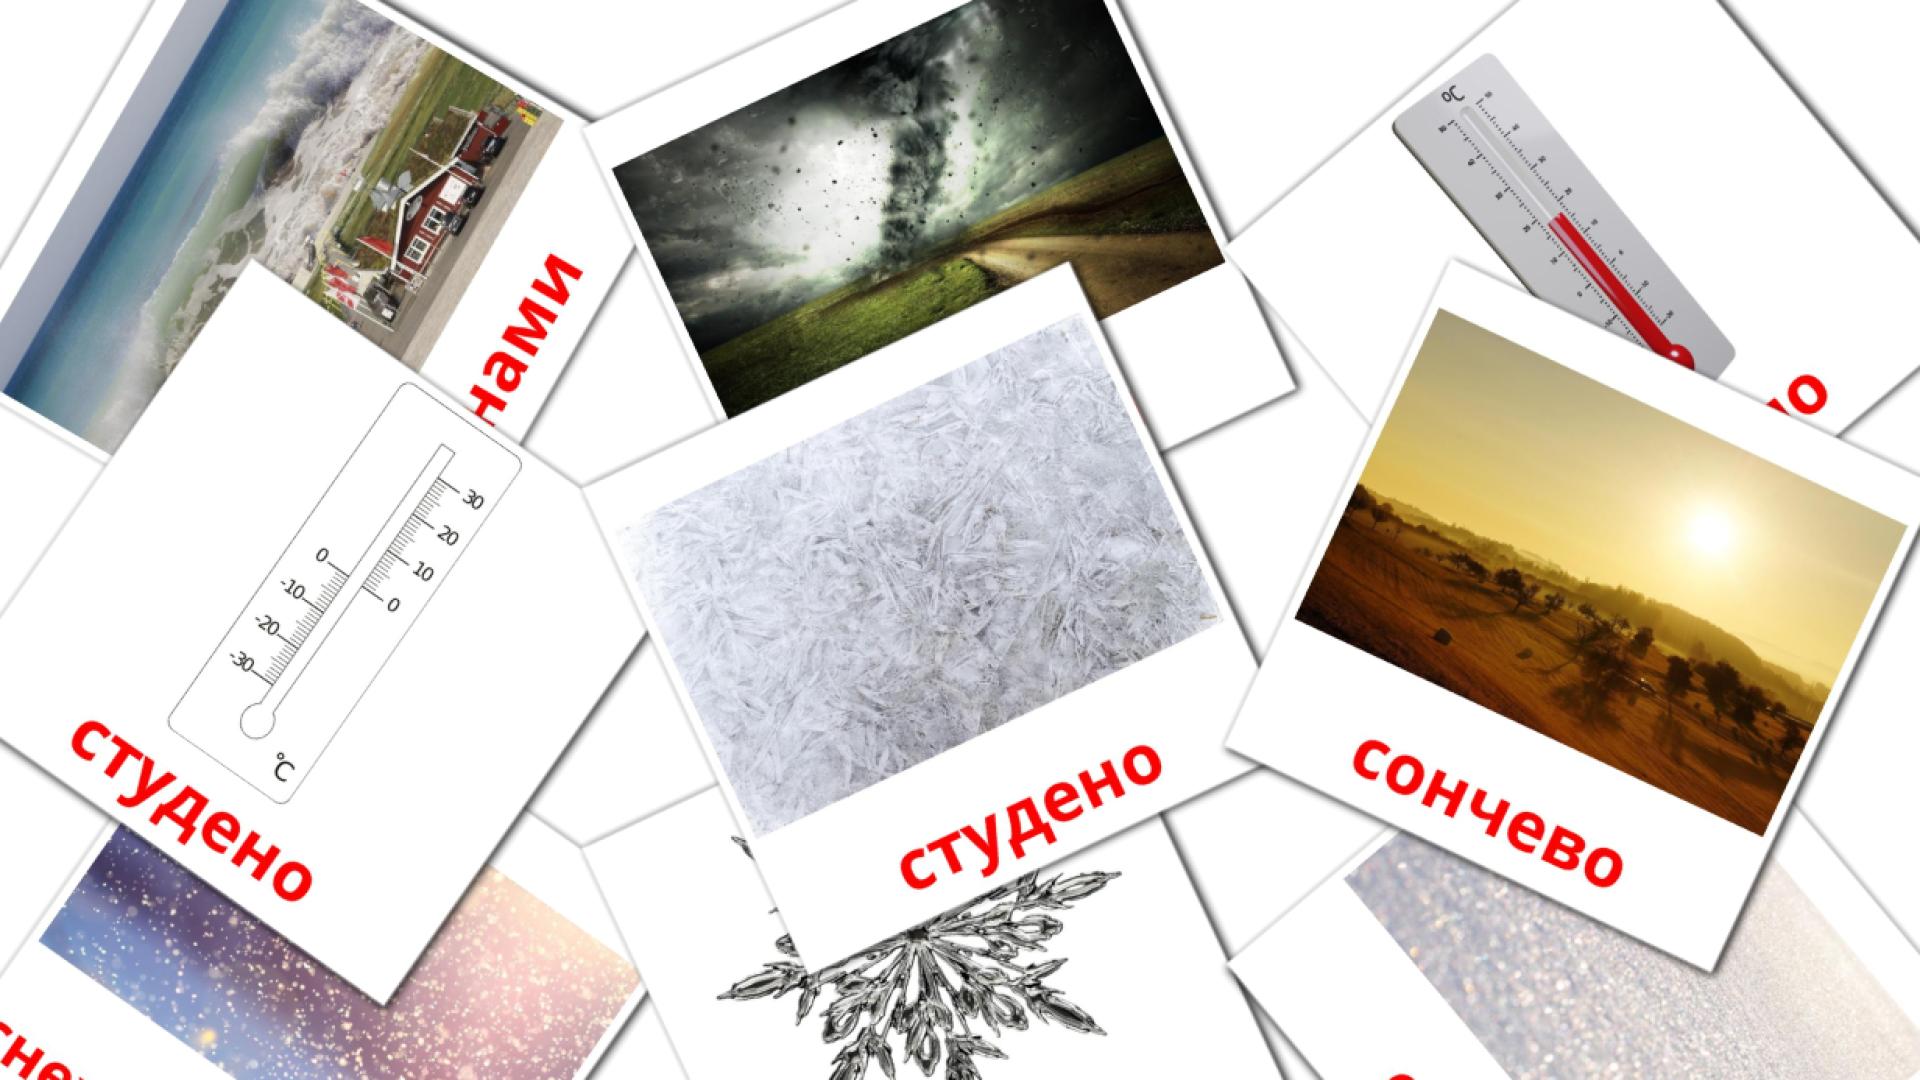 Bildkarten für Годишно време и природата